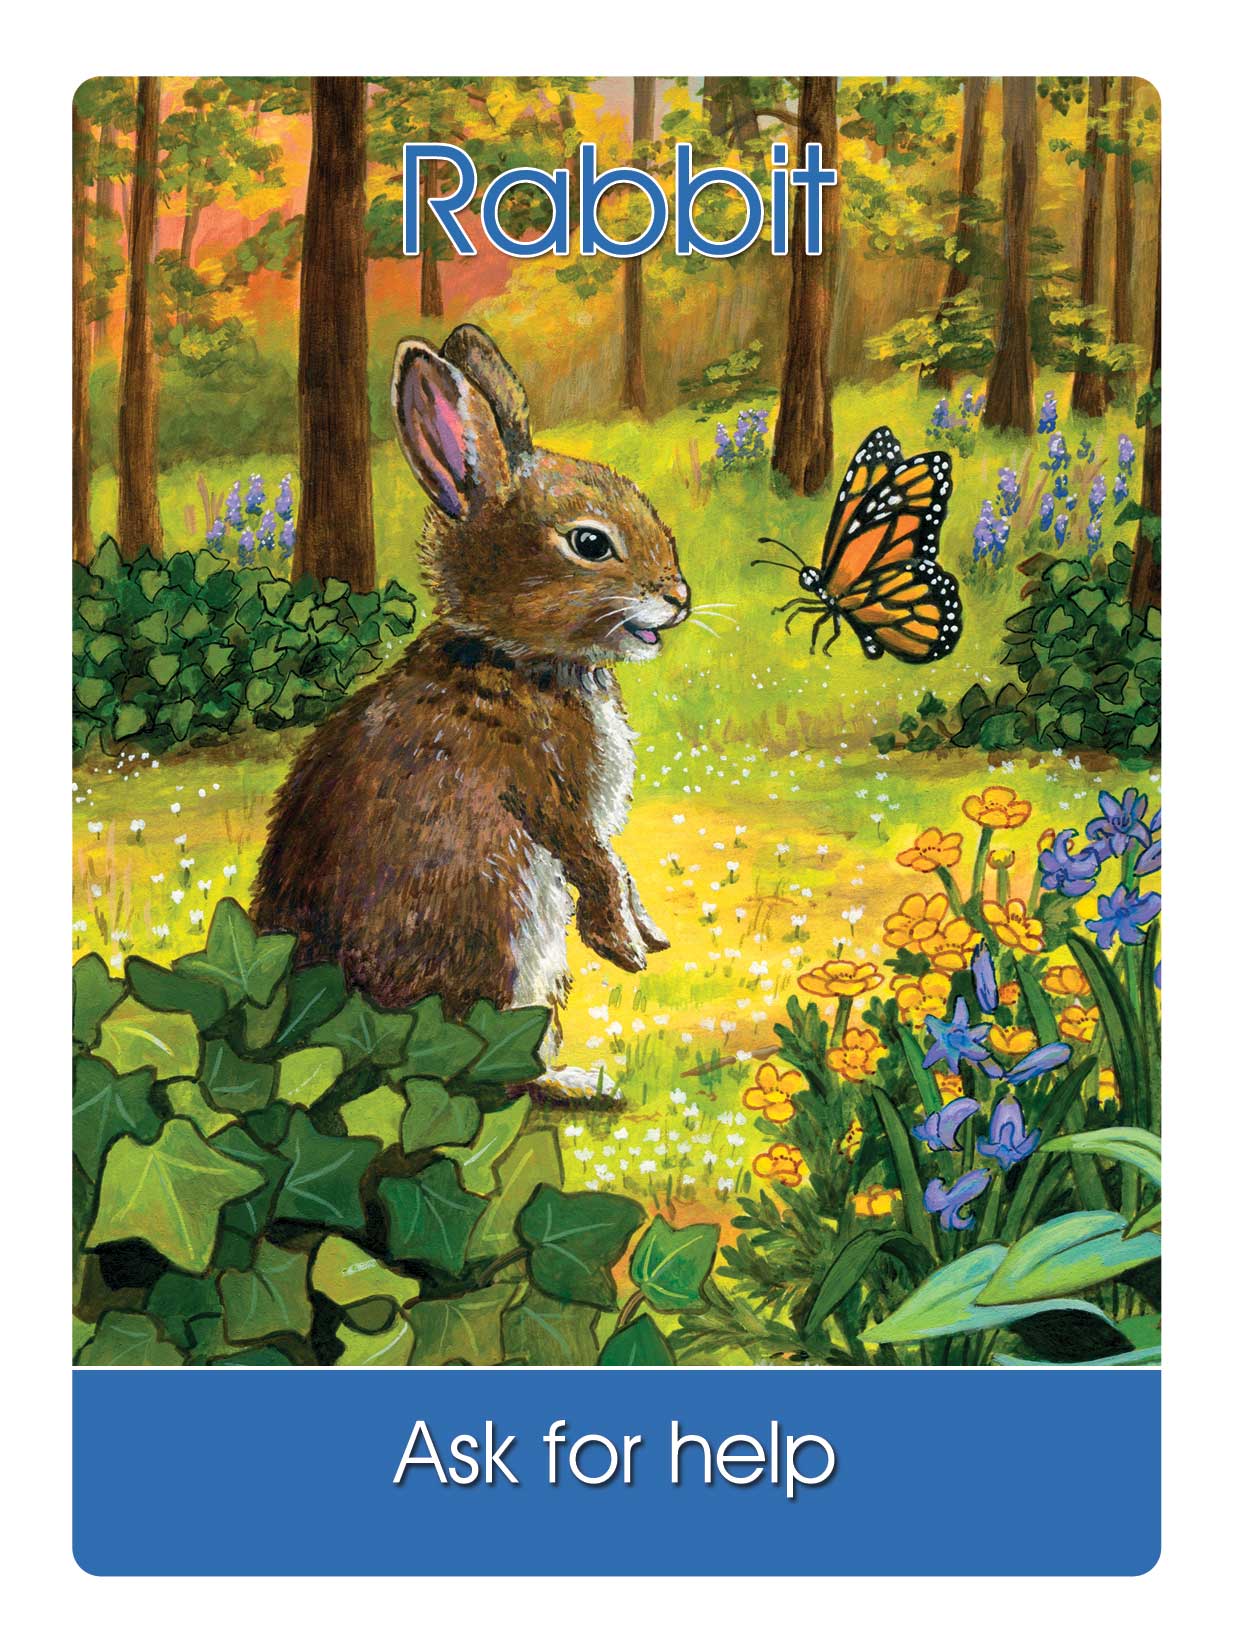 14) Rabbit's Message: “Ask for Help” - Dr. Steven Farmer